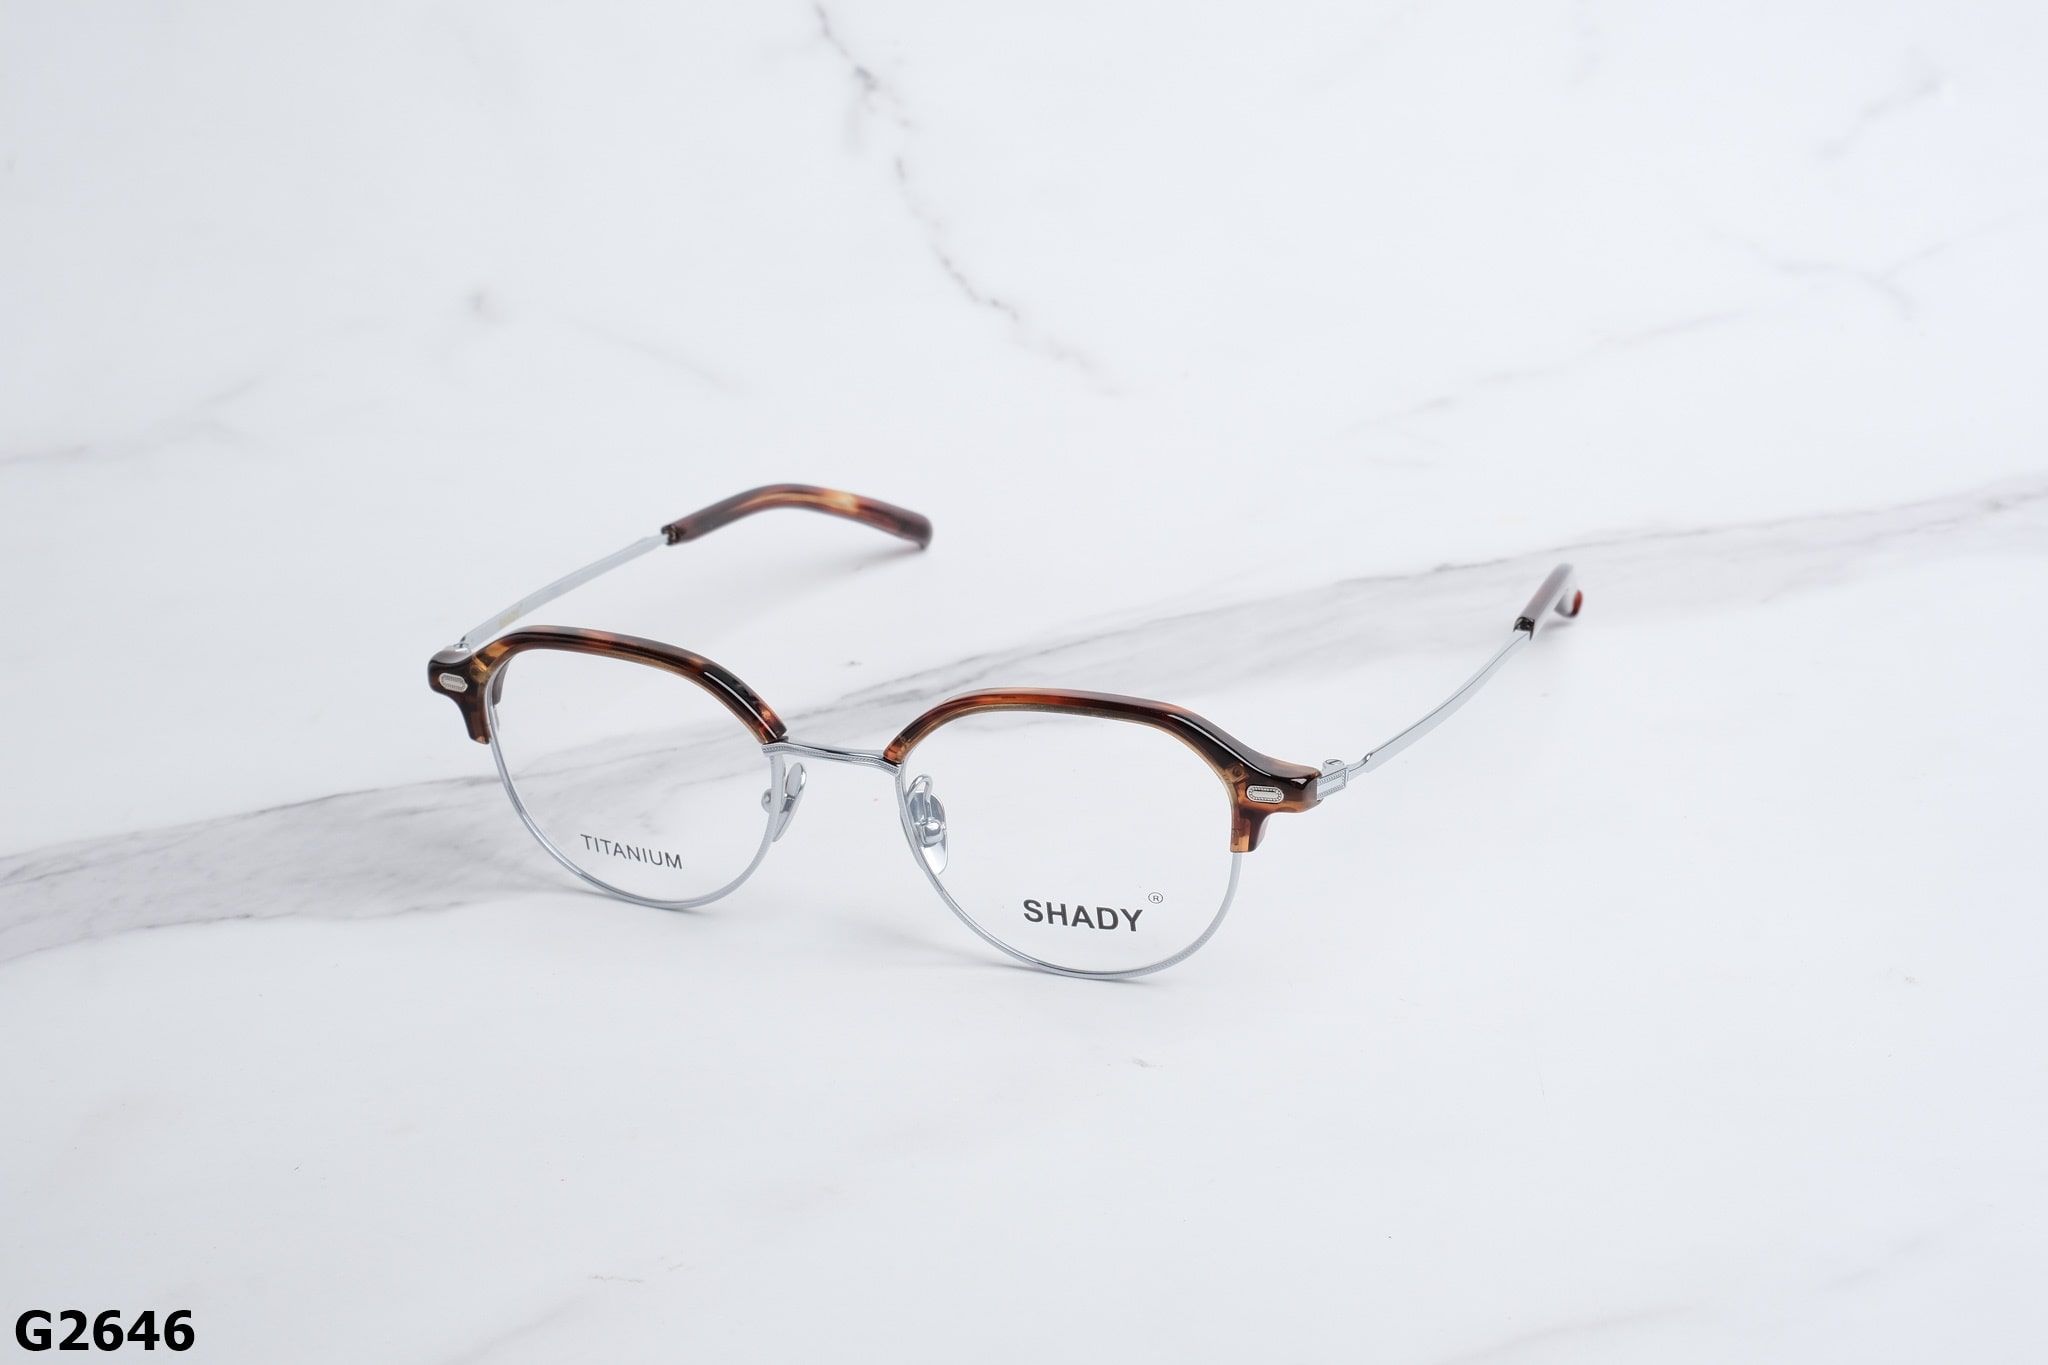  SHADY Eyewear - Glasses - G2646 